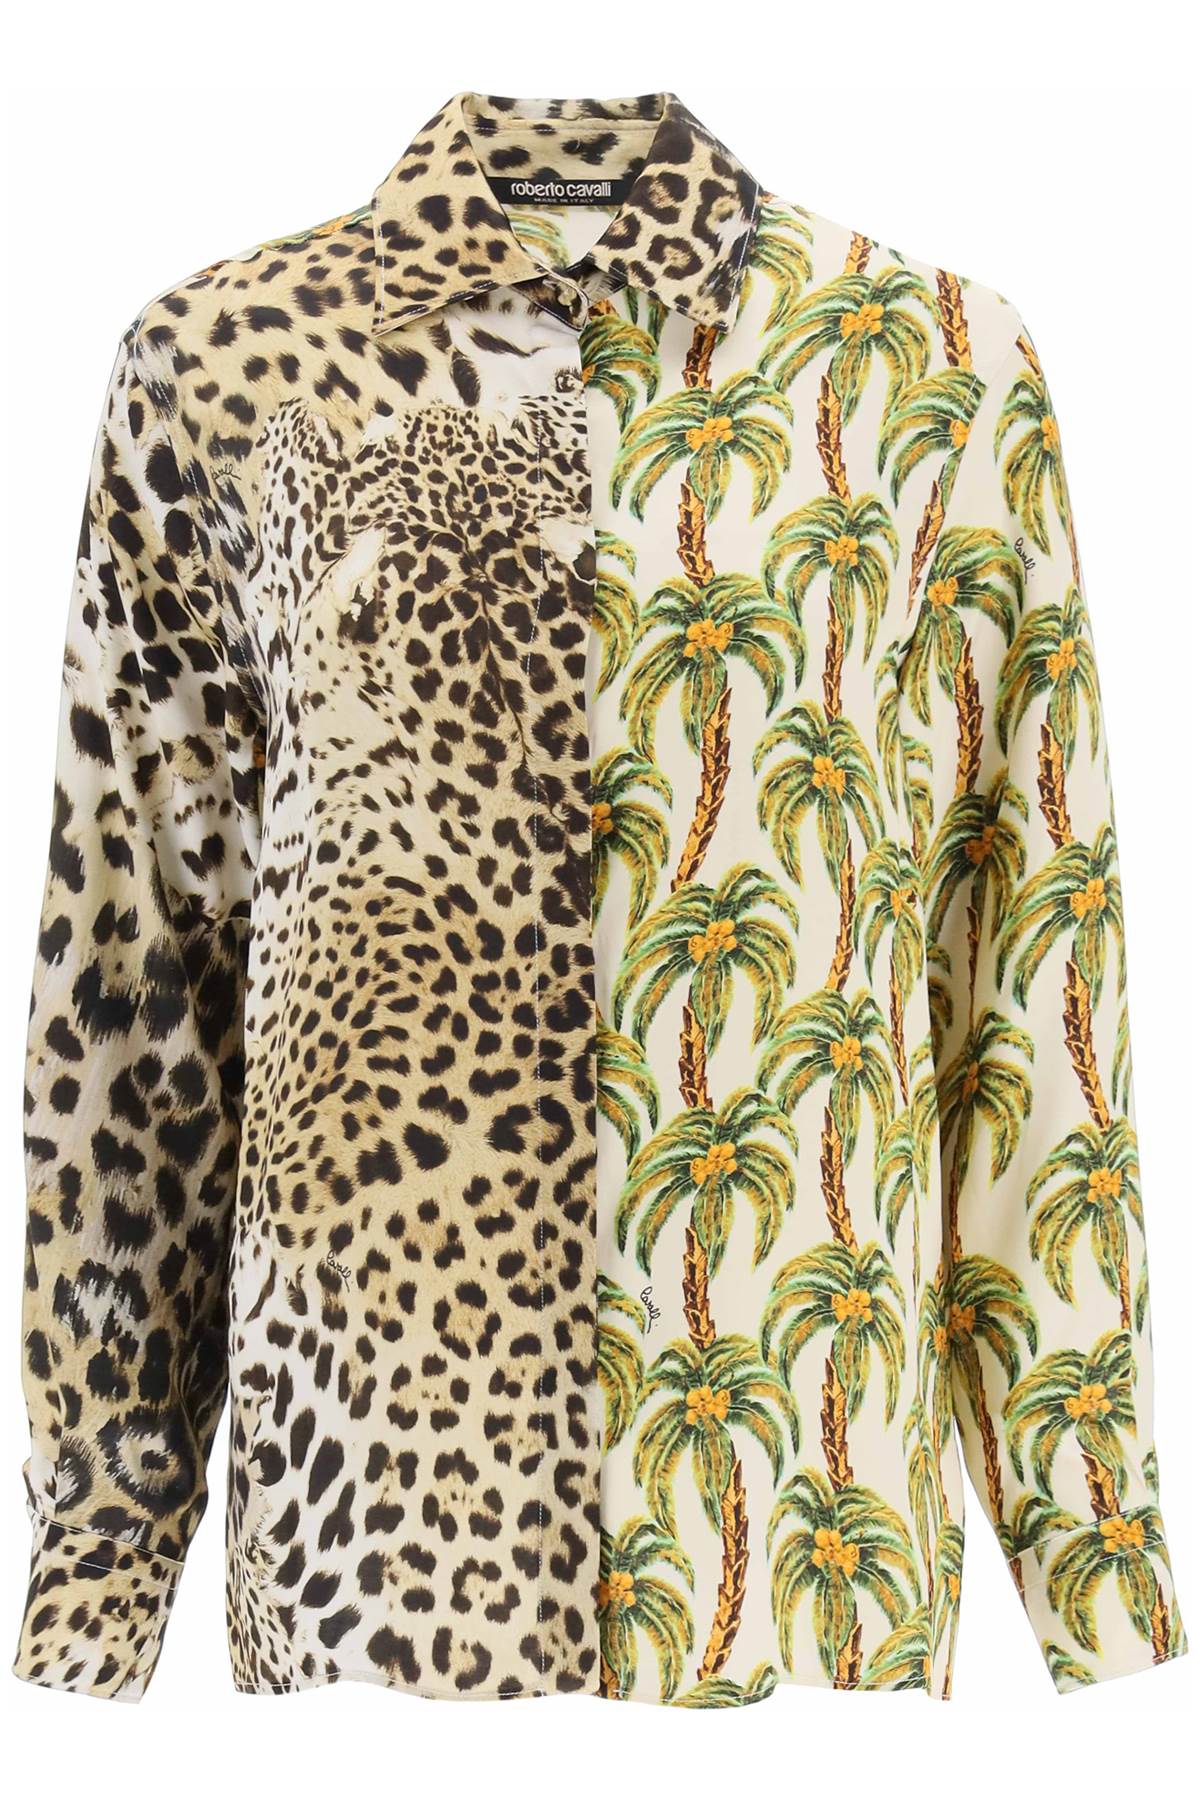 Roberto cavalli jaguar and palm tree printed shirt-0